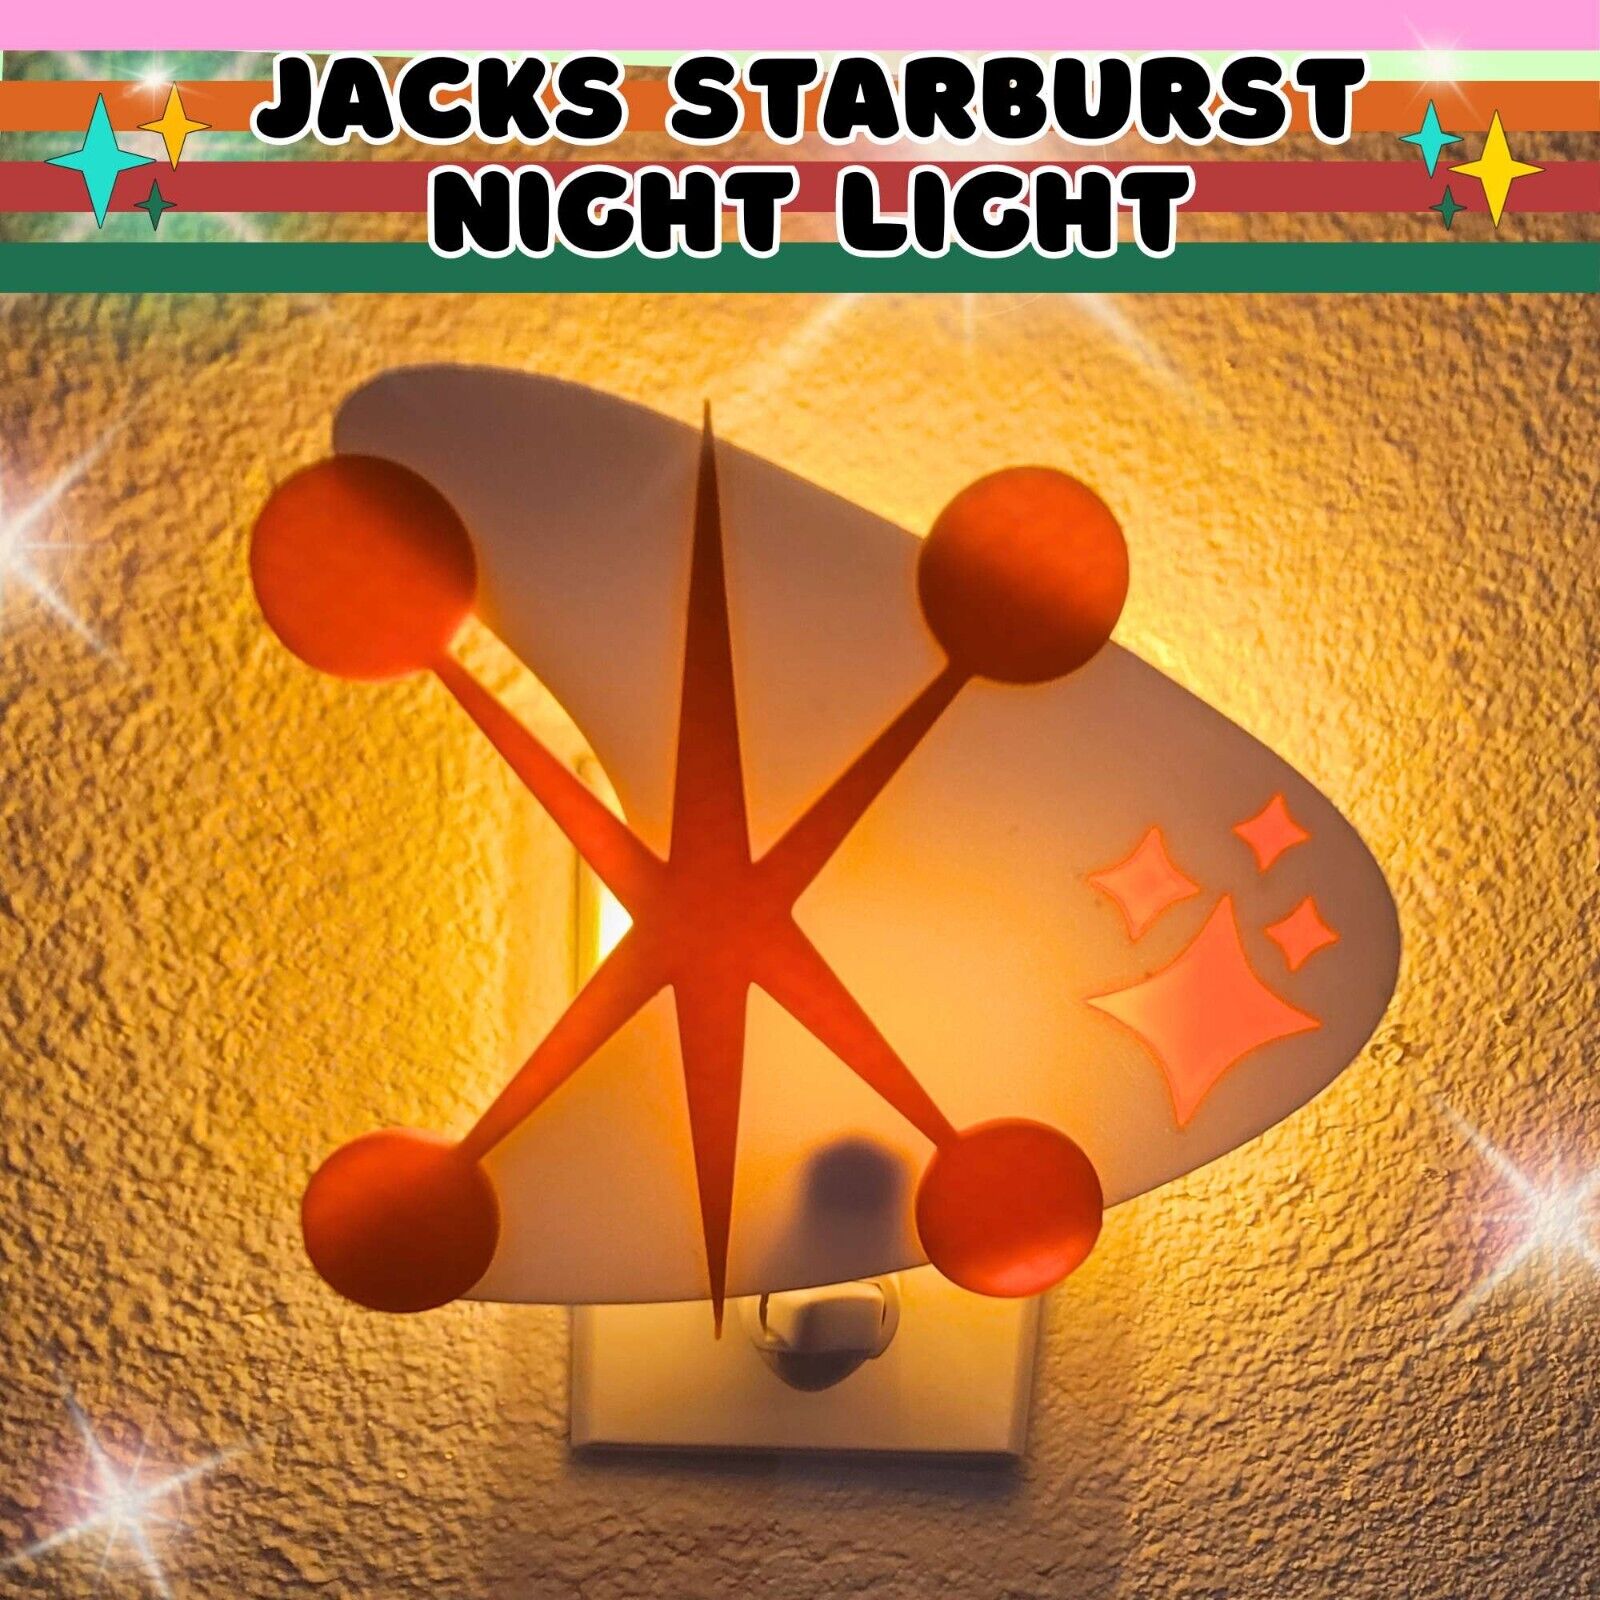 Mid Century Modern Night Light Jacks & Starbursts Retro Inspired Home Decor MCM